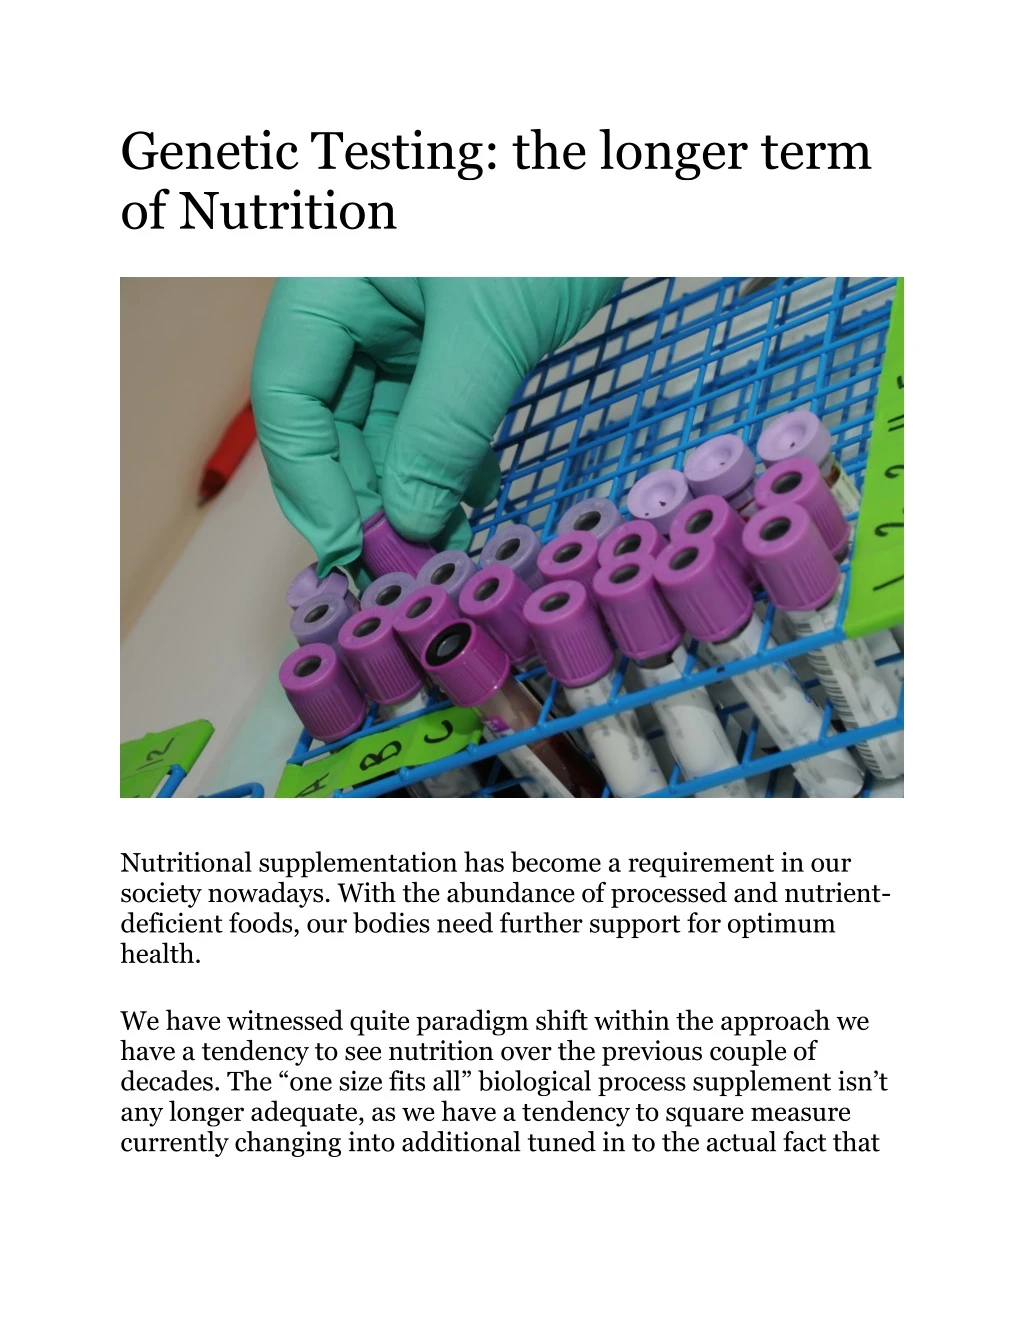 genetic testing the longer term of nutrition